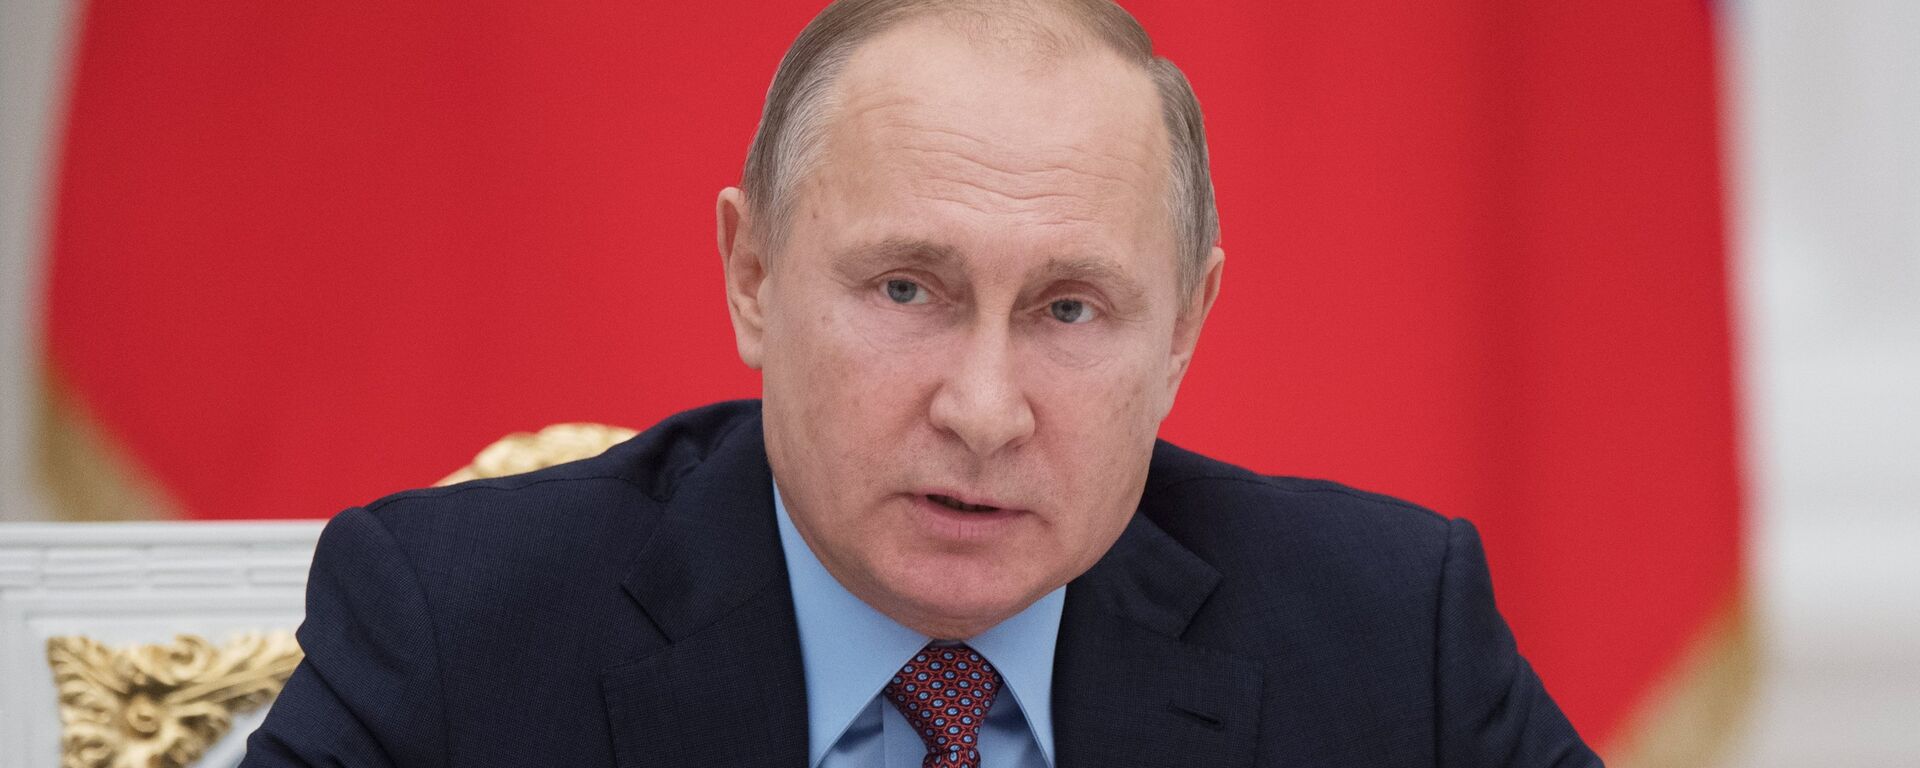 Ruski predsednik Vladimir Putin - Sputnik Srbija, 1920, 08.03.2018